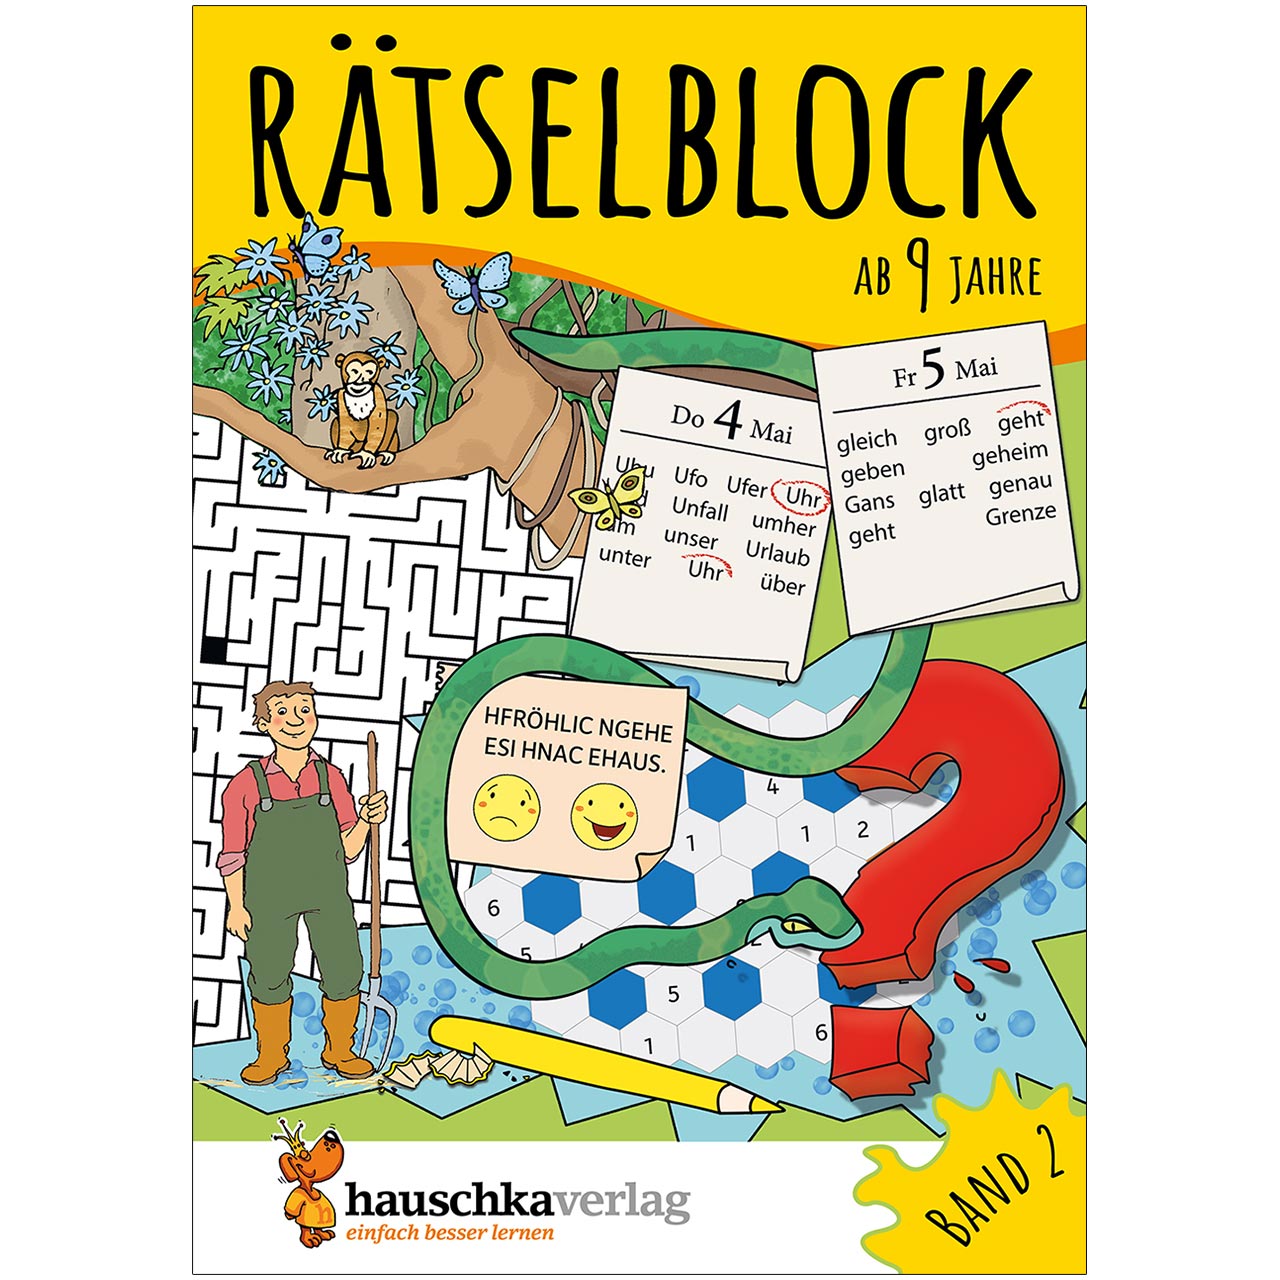 Rätselblock – Rätselspaß für Kinder ab 9 Jahre Bd 2